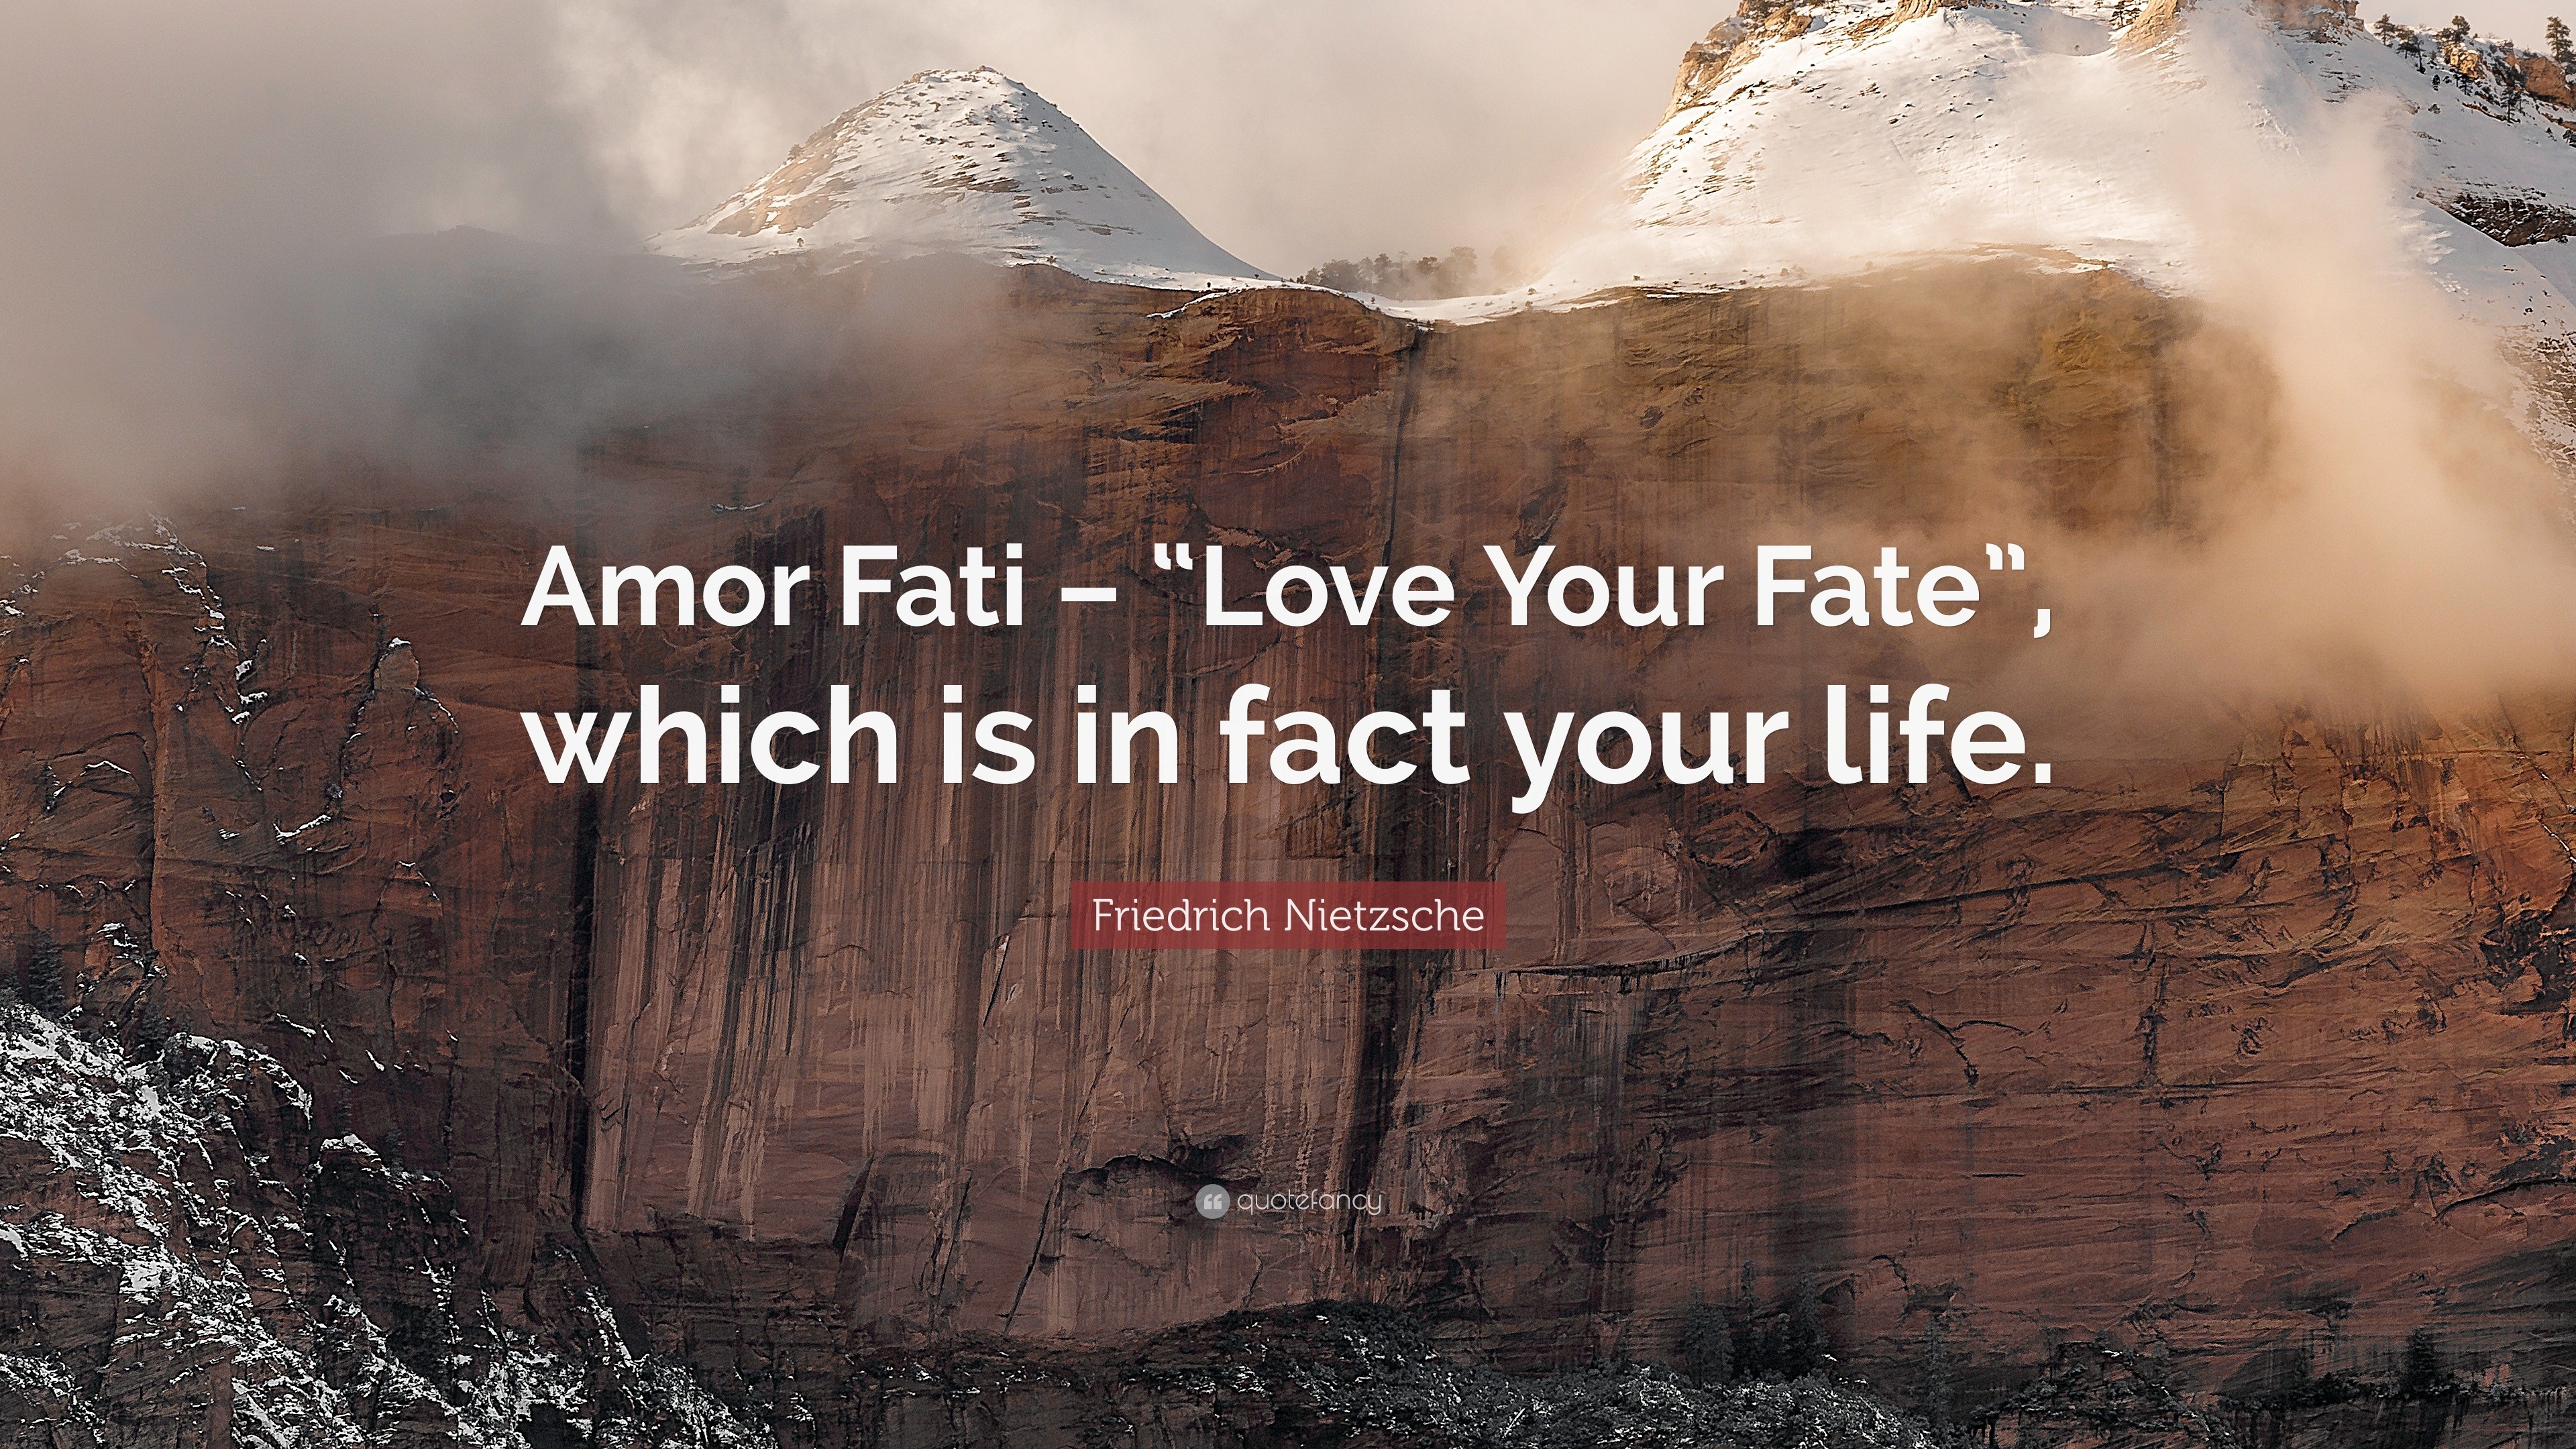 Friedrich Nietzsche Quote: “Amor Fati – “Love Your Fate”, which is in